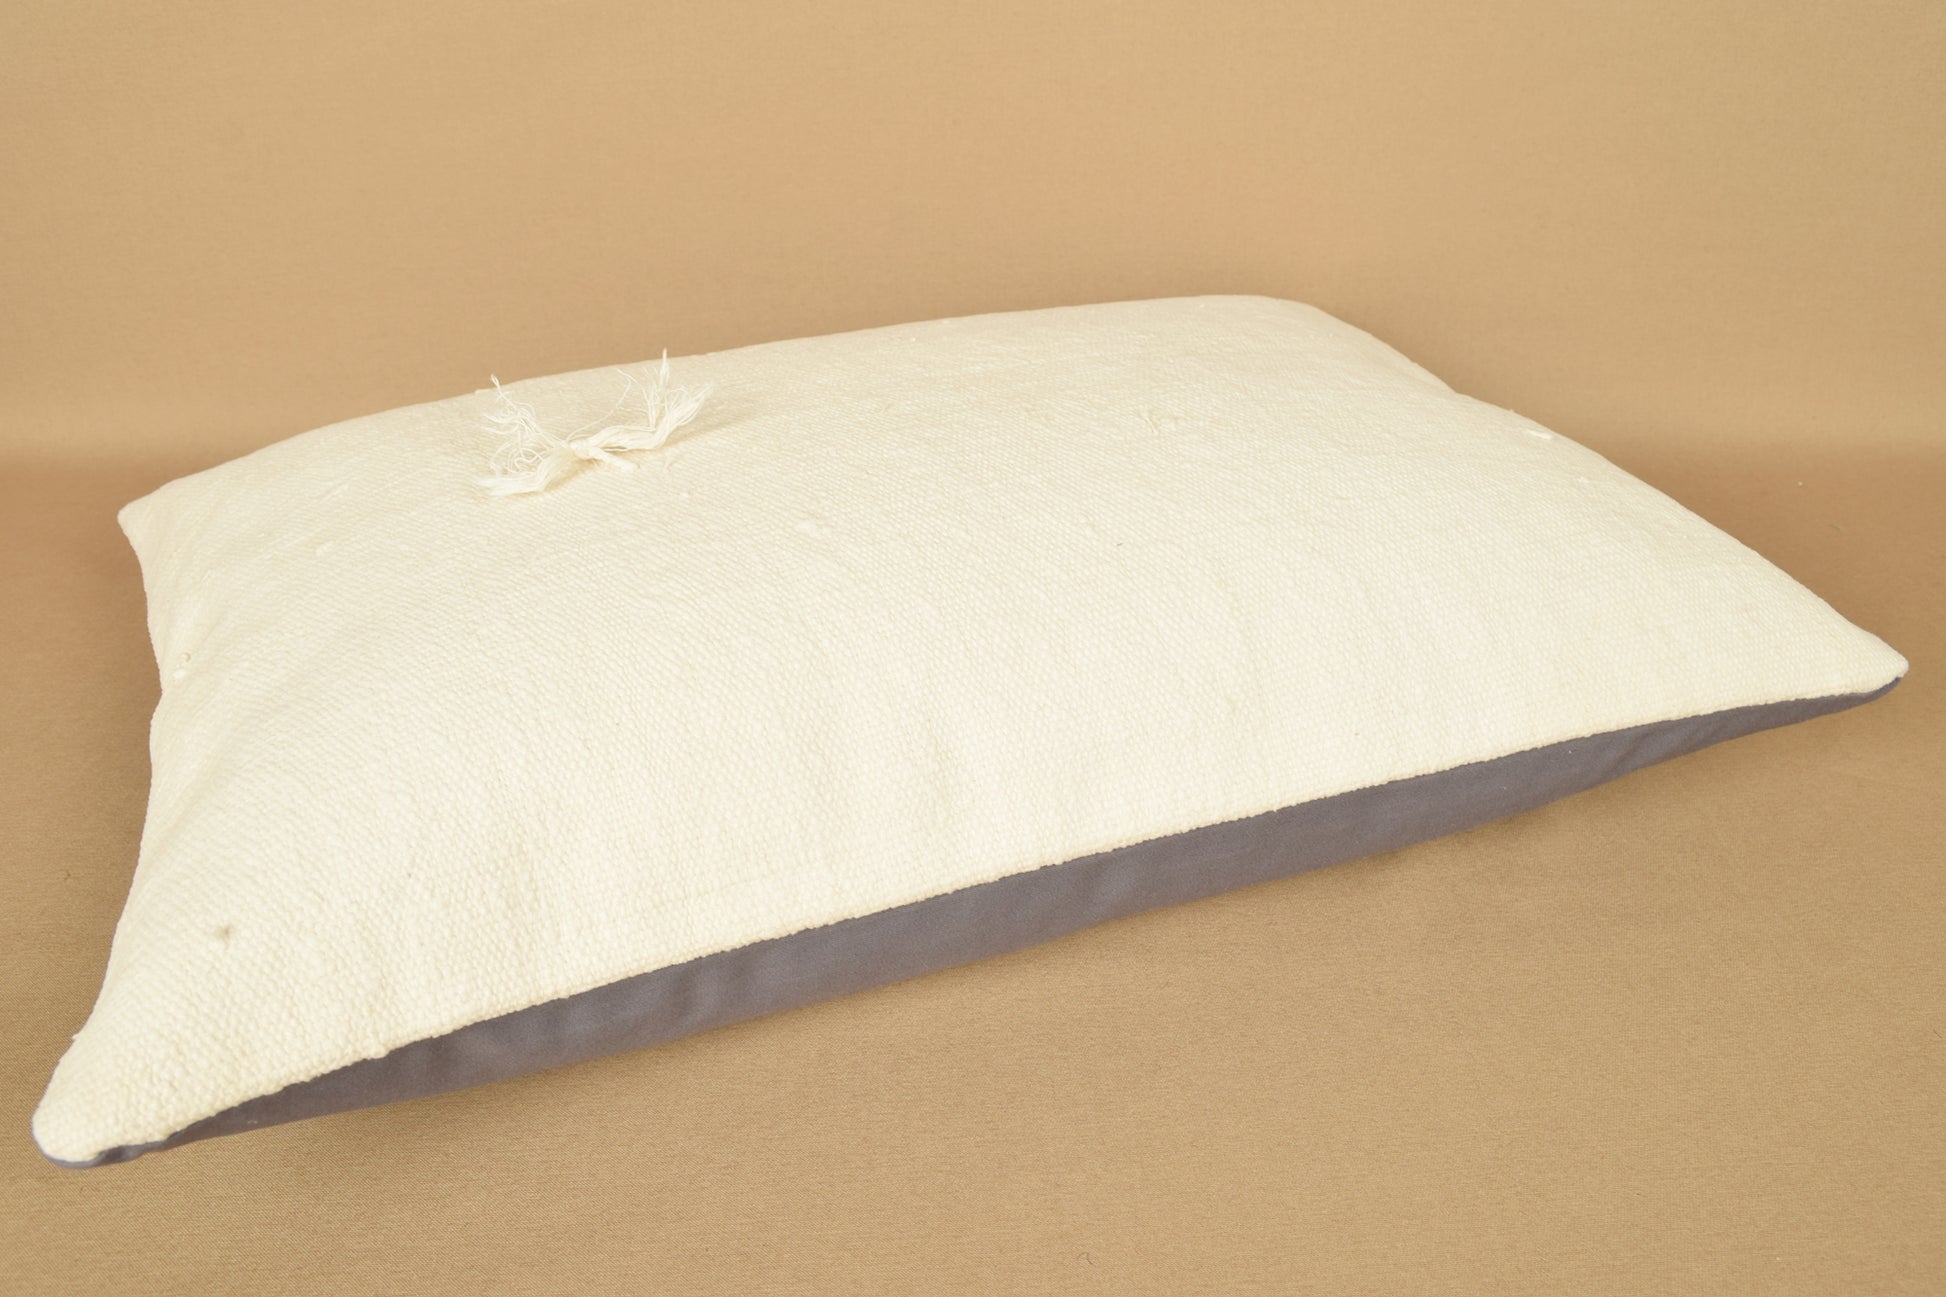 Turkish Kilim Pillow Cover 16x24 " 40x60 cm. E00733